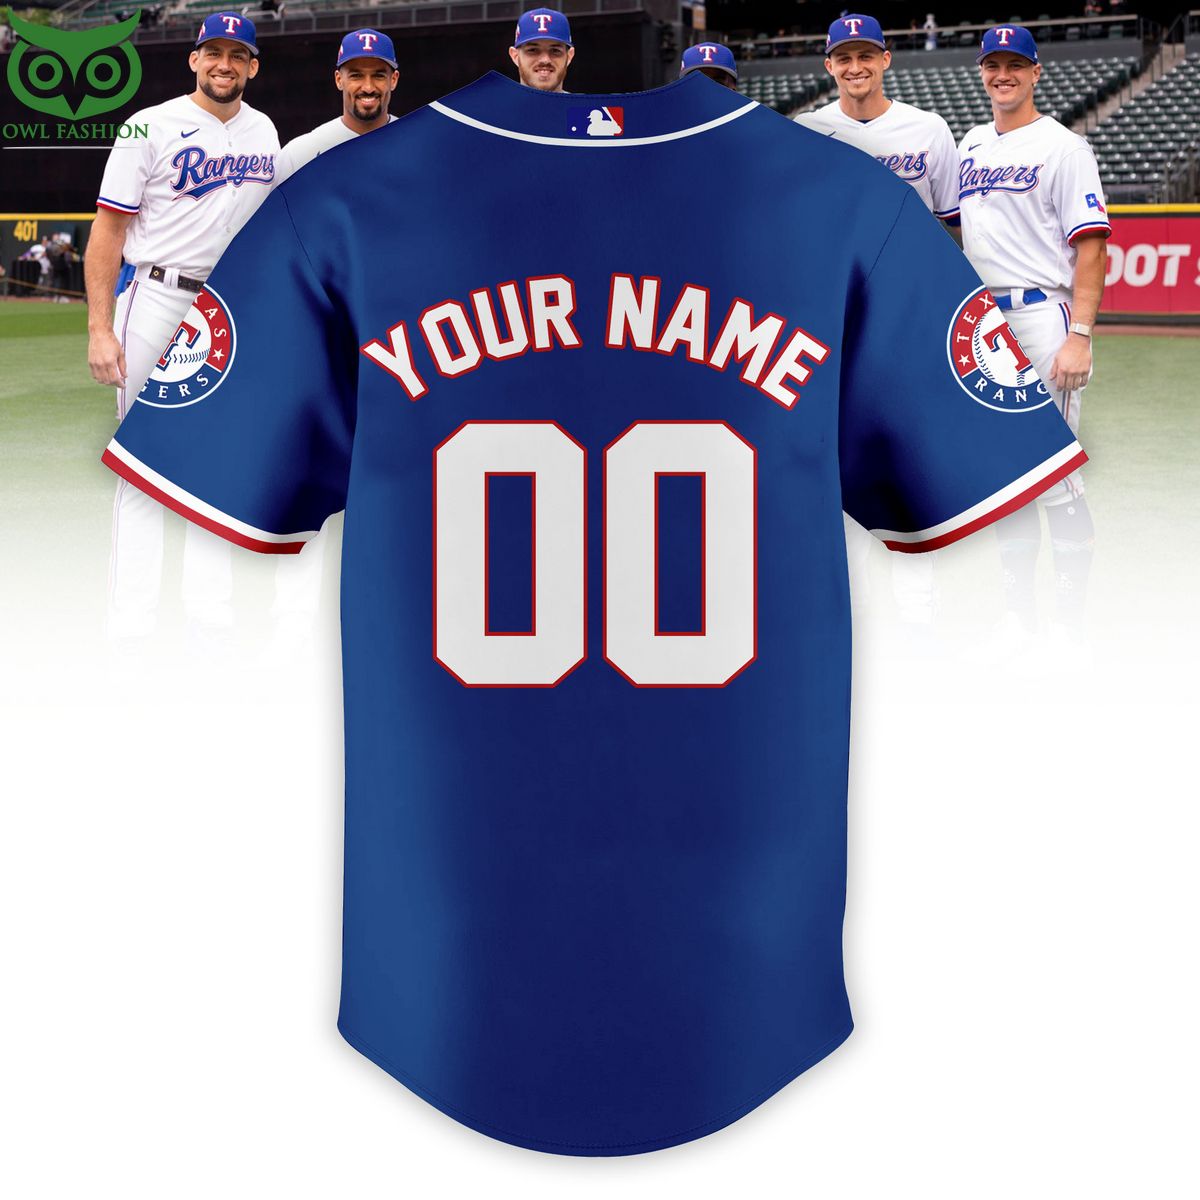 custome name number texas rangers mlb baseball jersey 5 TBdjN.jpg